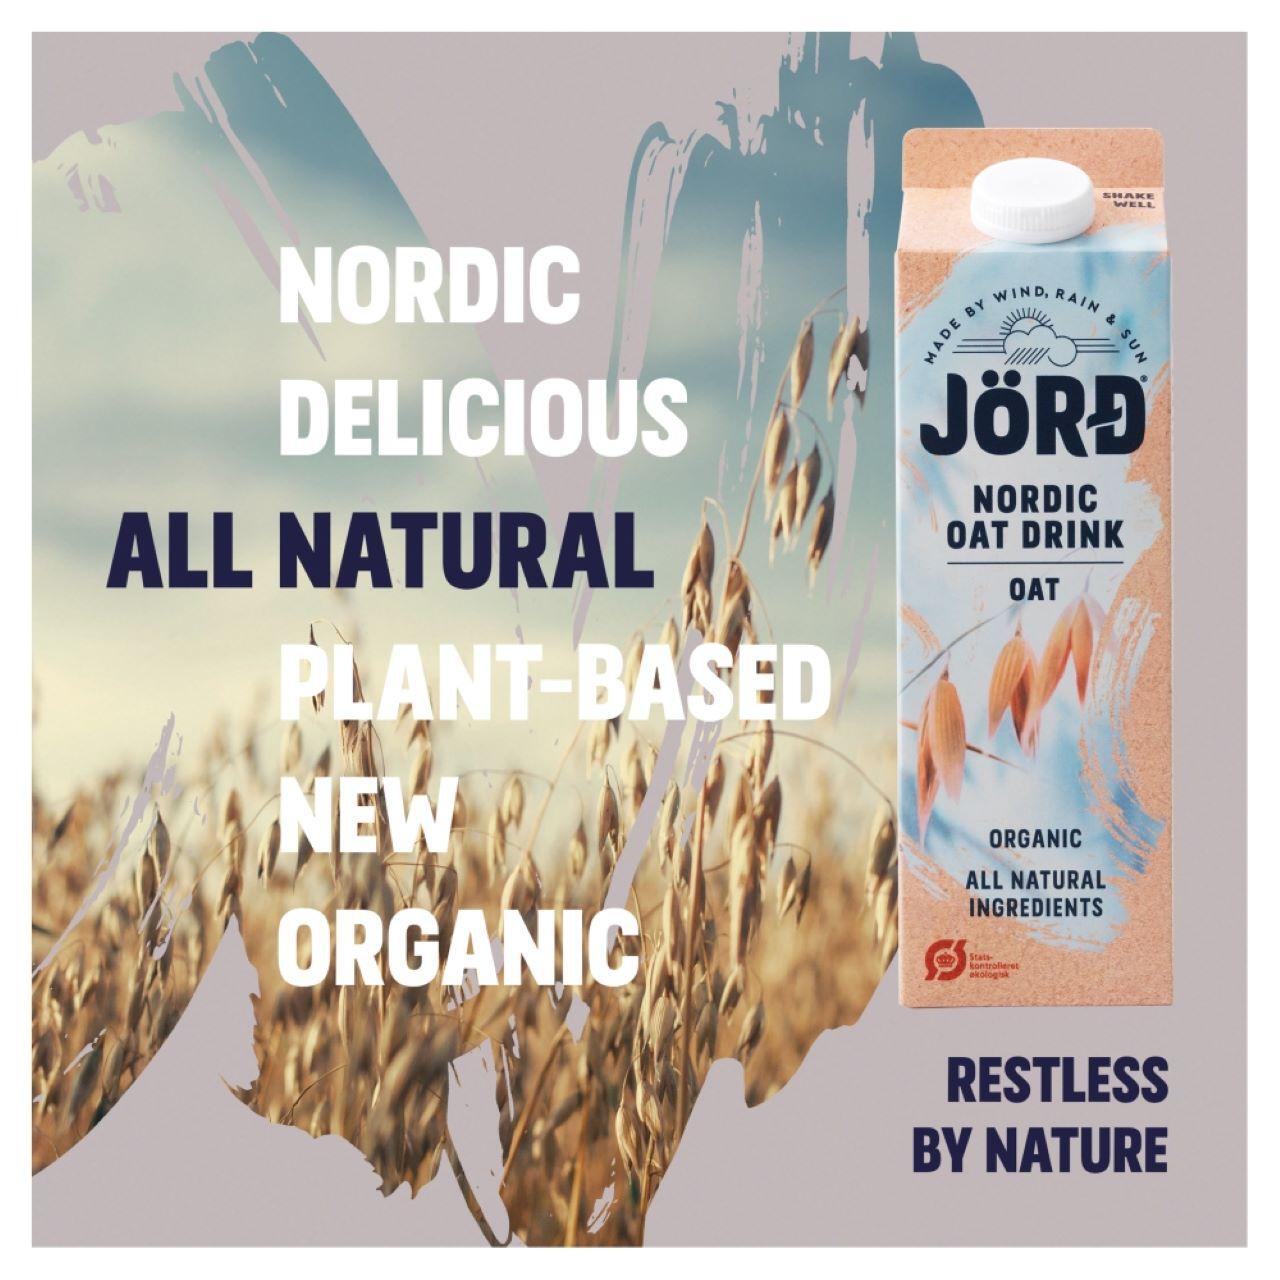 Jord Organic Chilled Oat Drink 1l